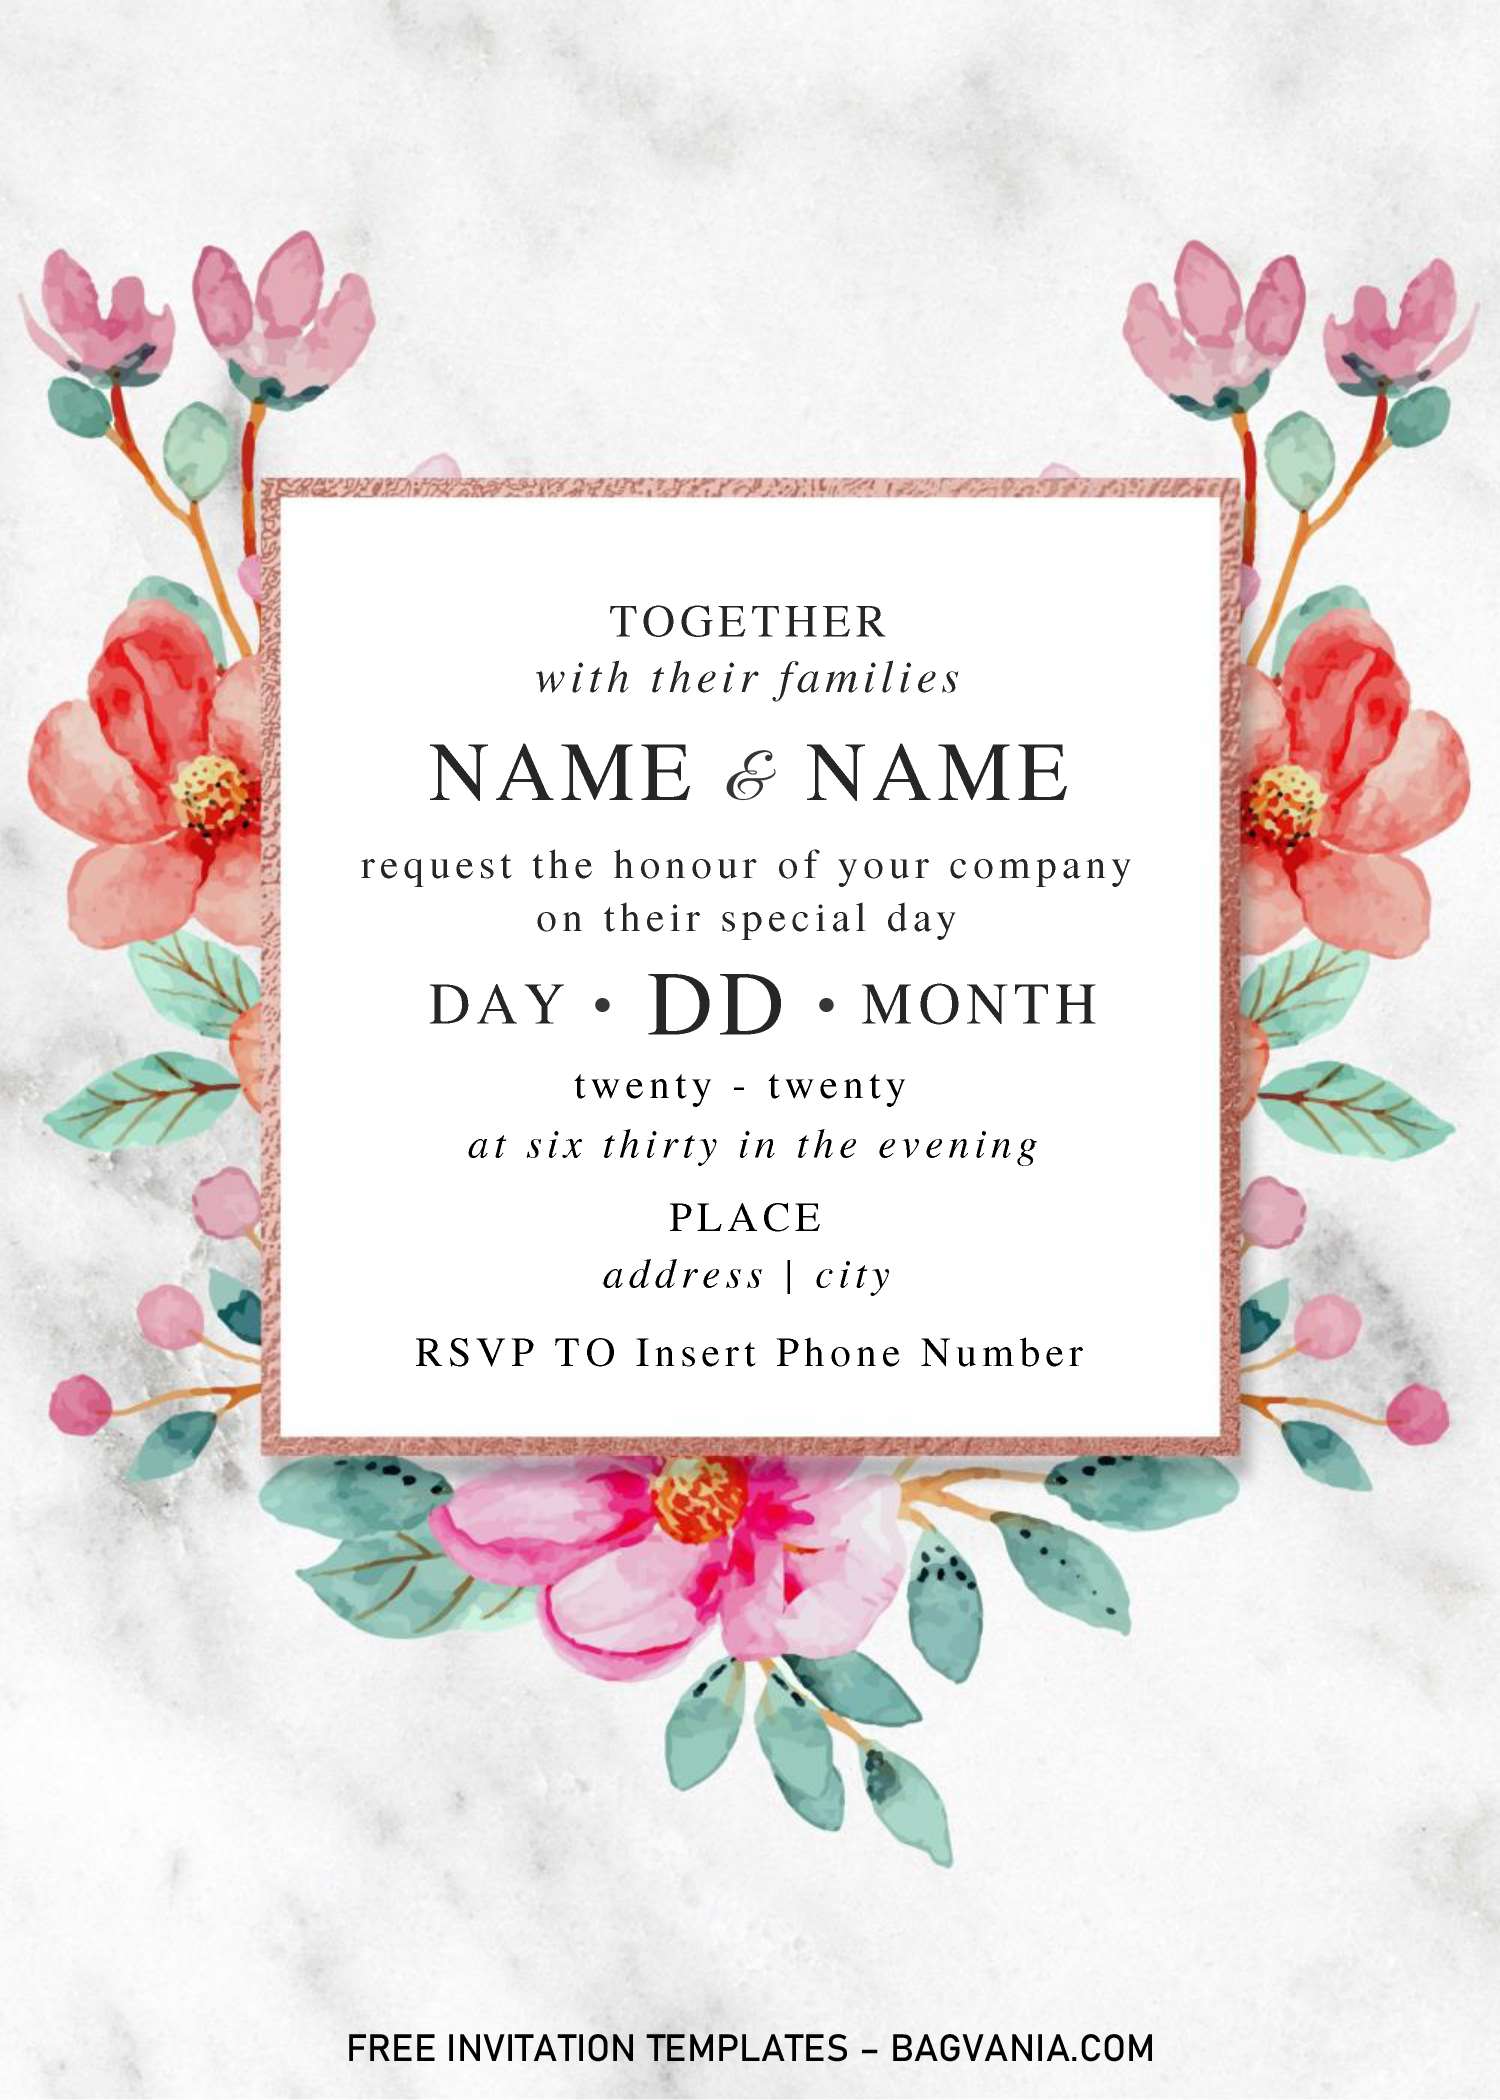 Google Wedding Invitation Templates